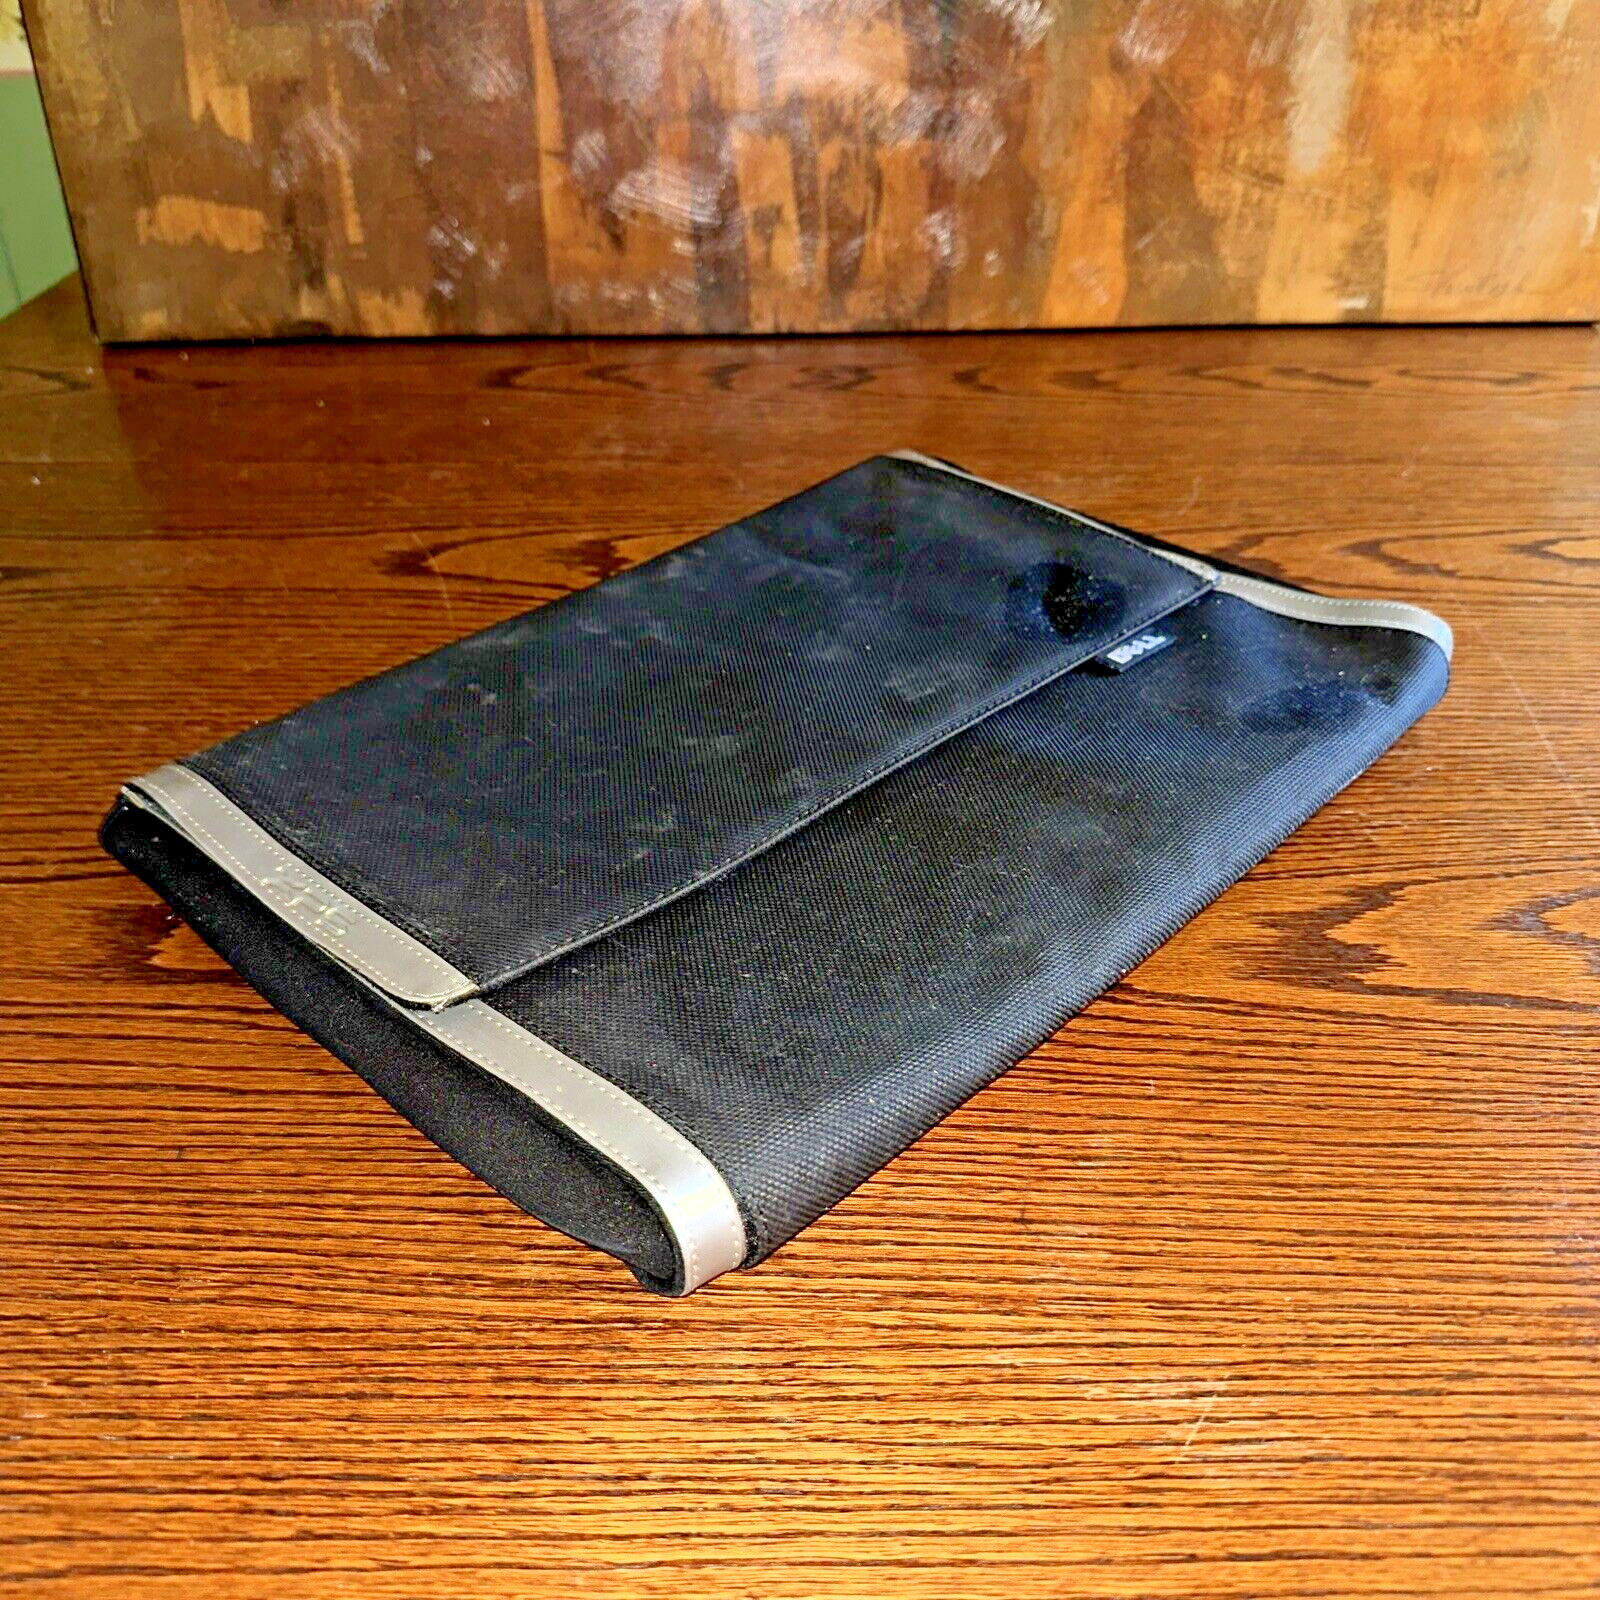 Dell Tablet Bag Brushed Fleece Interior Magnetic Closure Black Silver Nice Clean